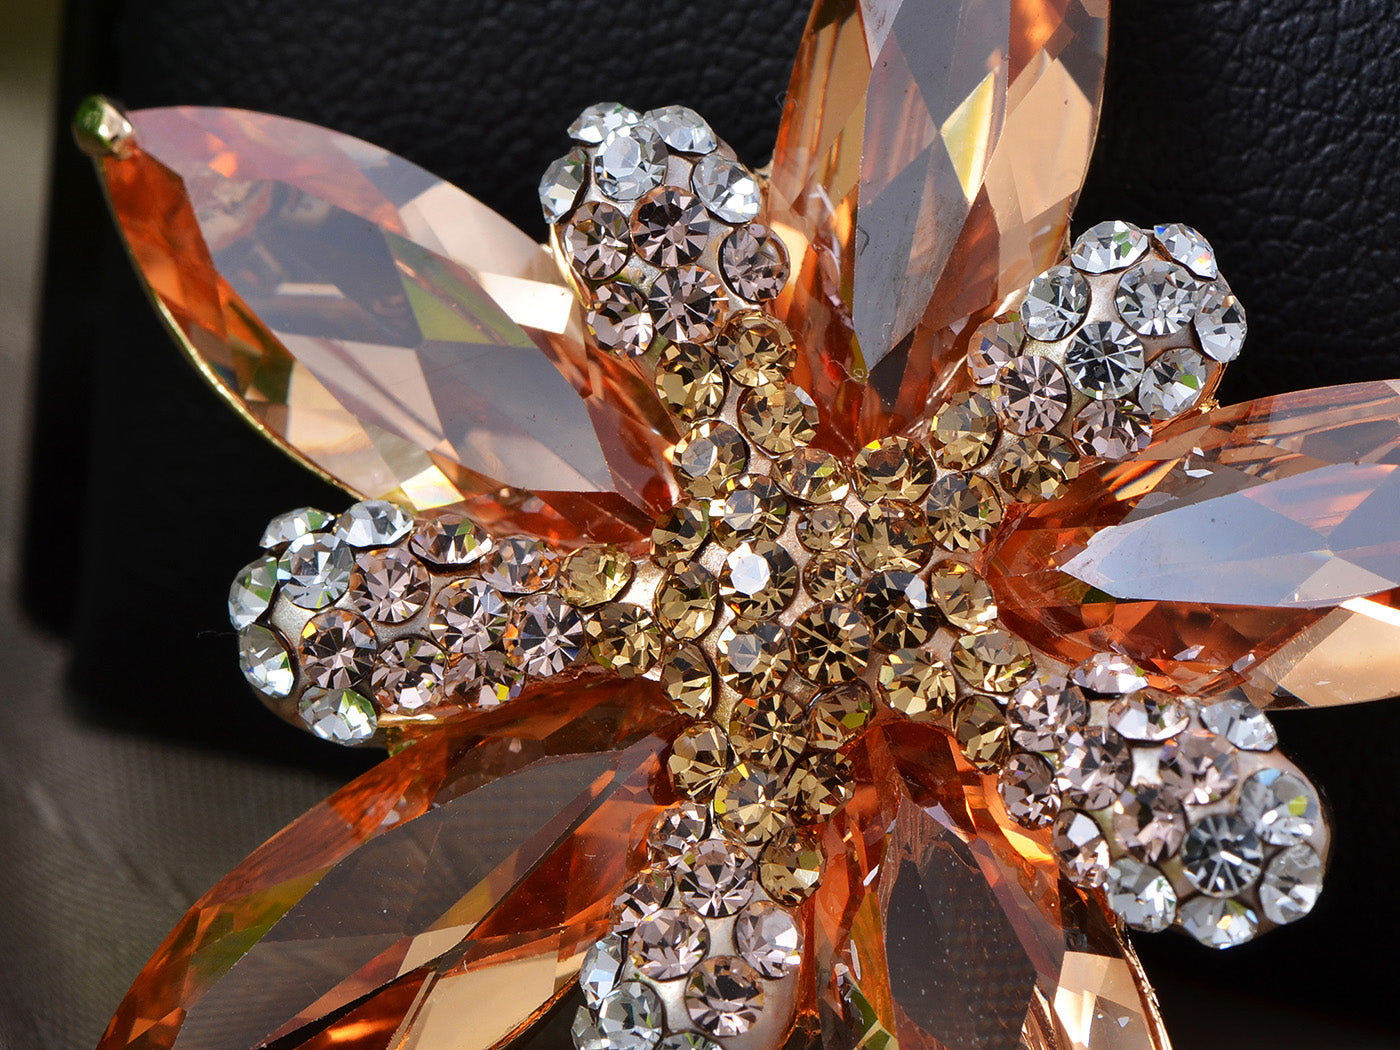 Swarovski Crystal Shine Topaz Pink Star Flower Floral Brooch Pin